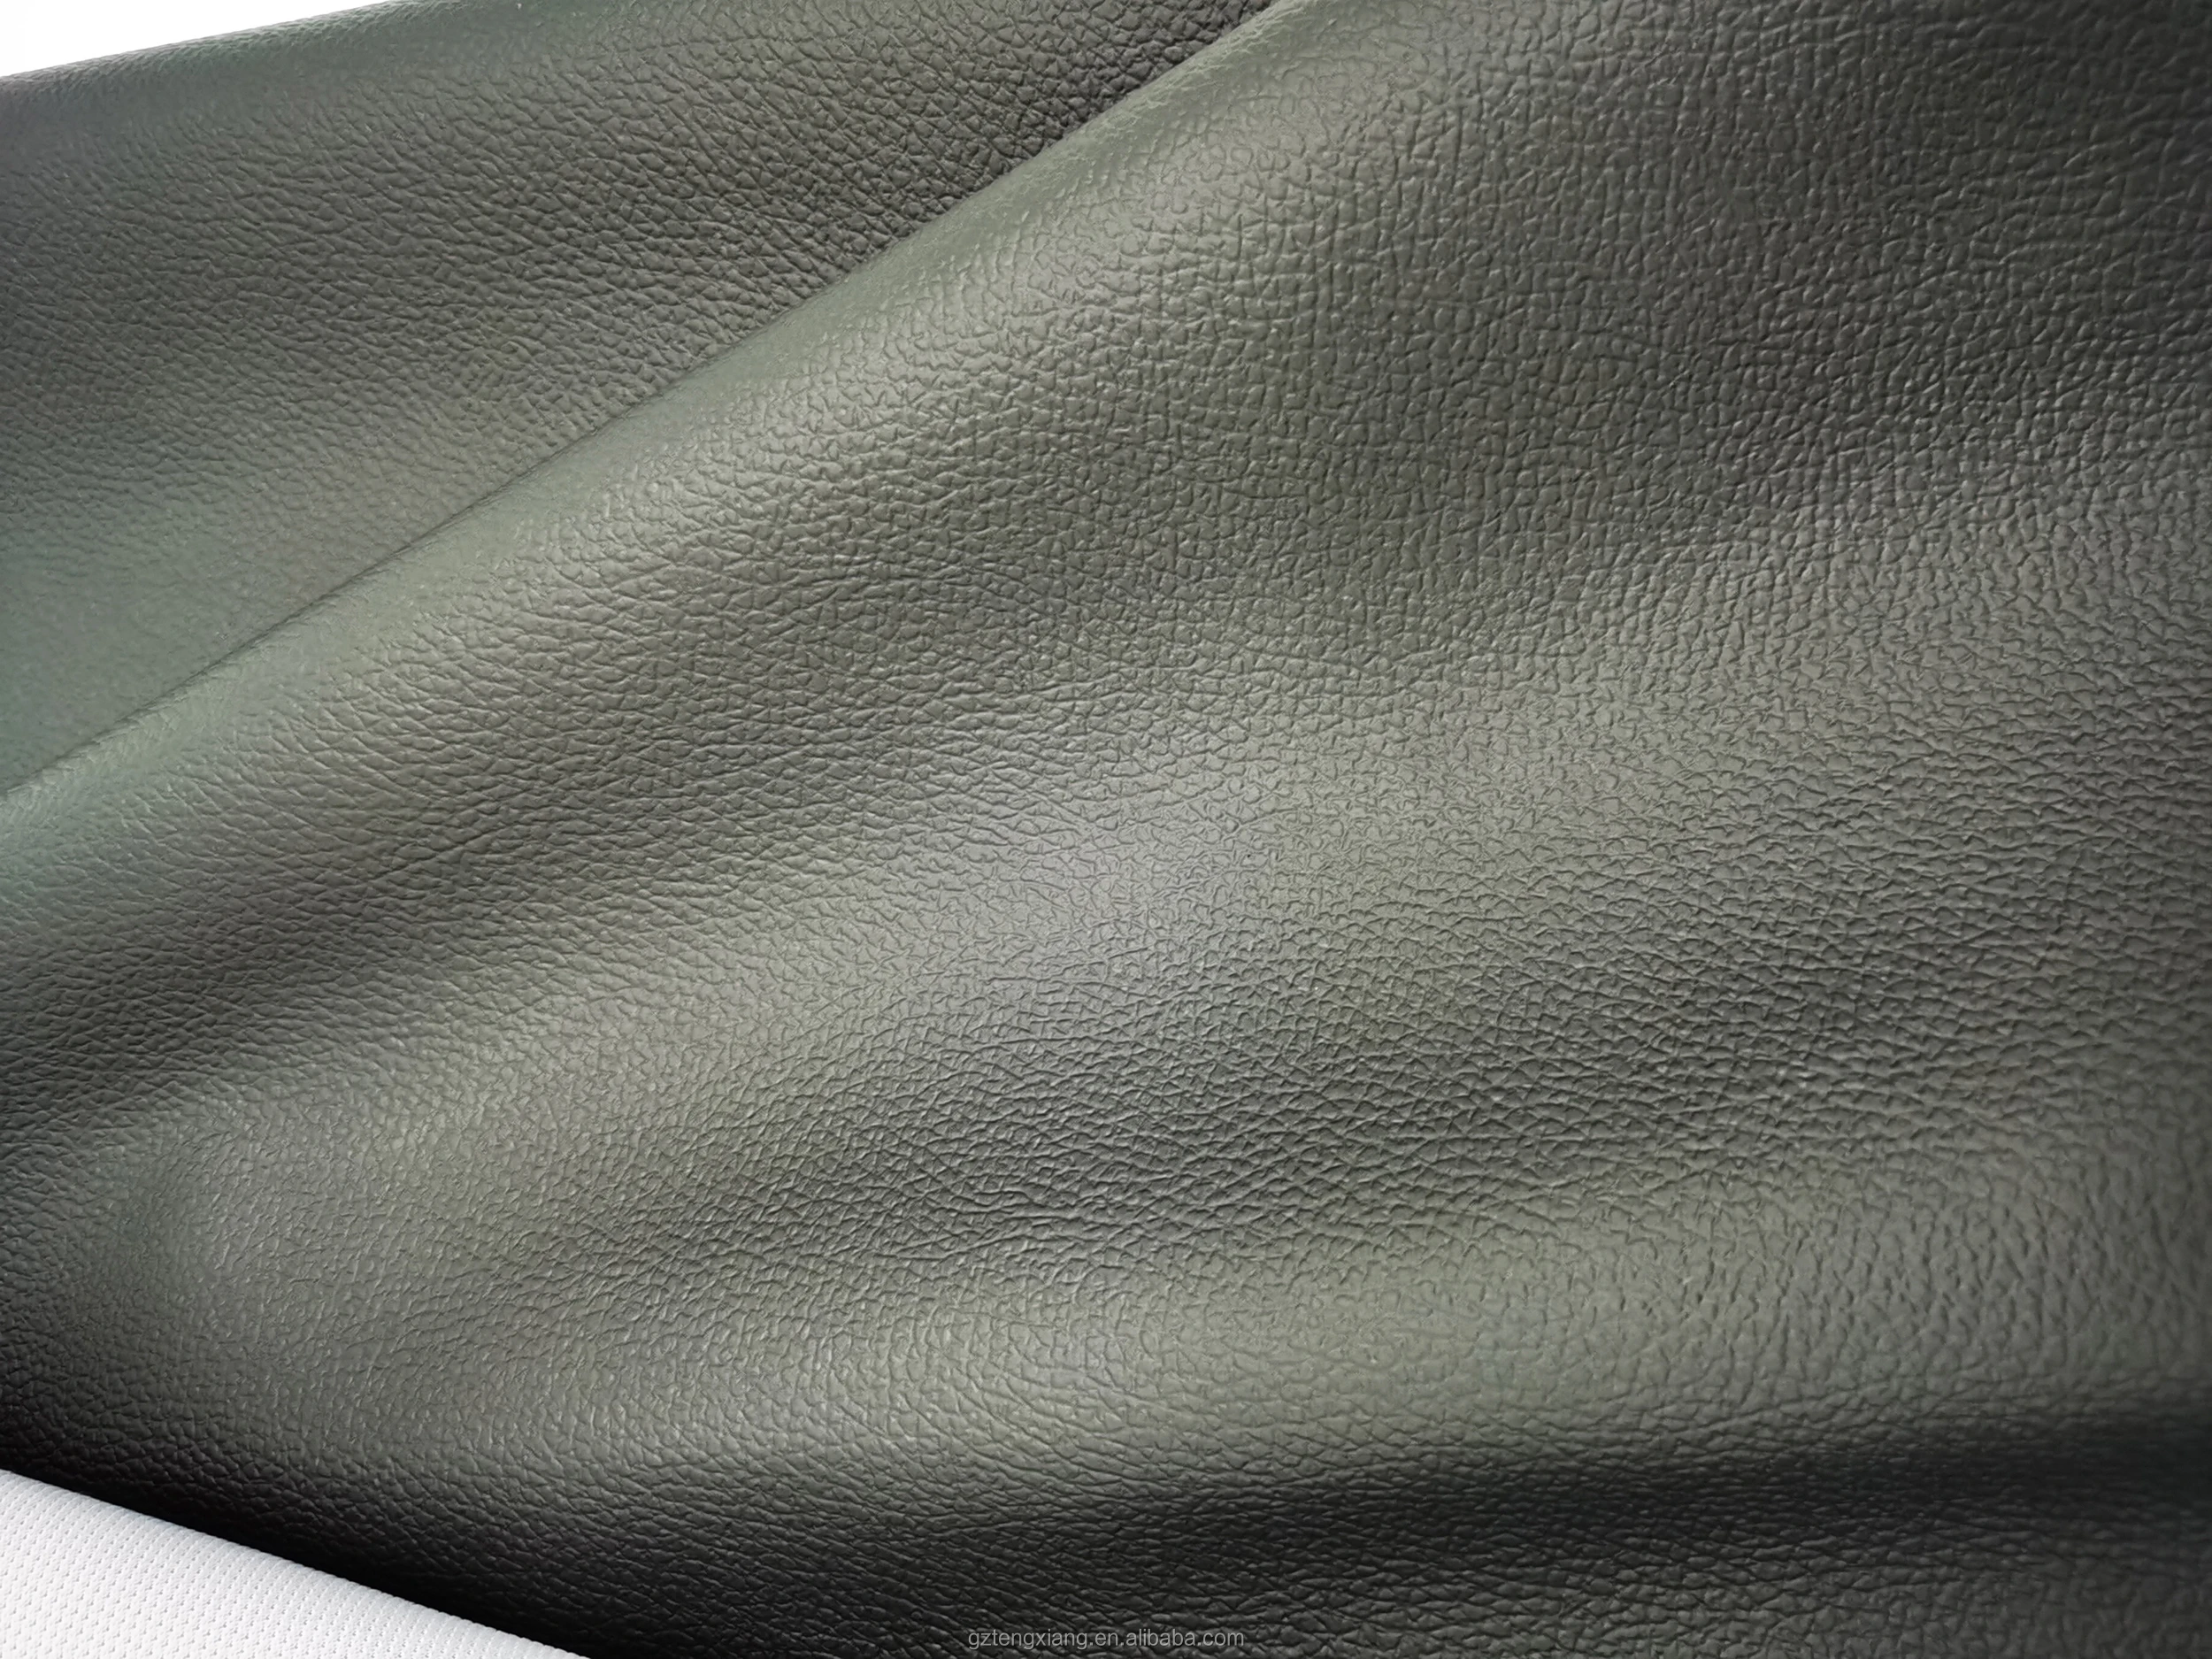 
Very cheap price 0.7mm BMW pattern pvc leather Mesh cloth PVC leather for car leather car fabric 